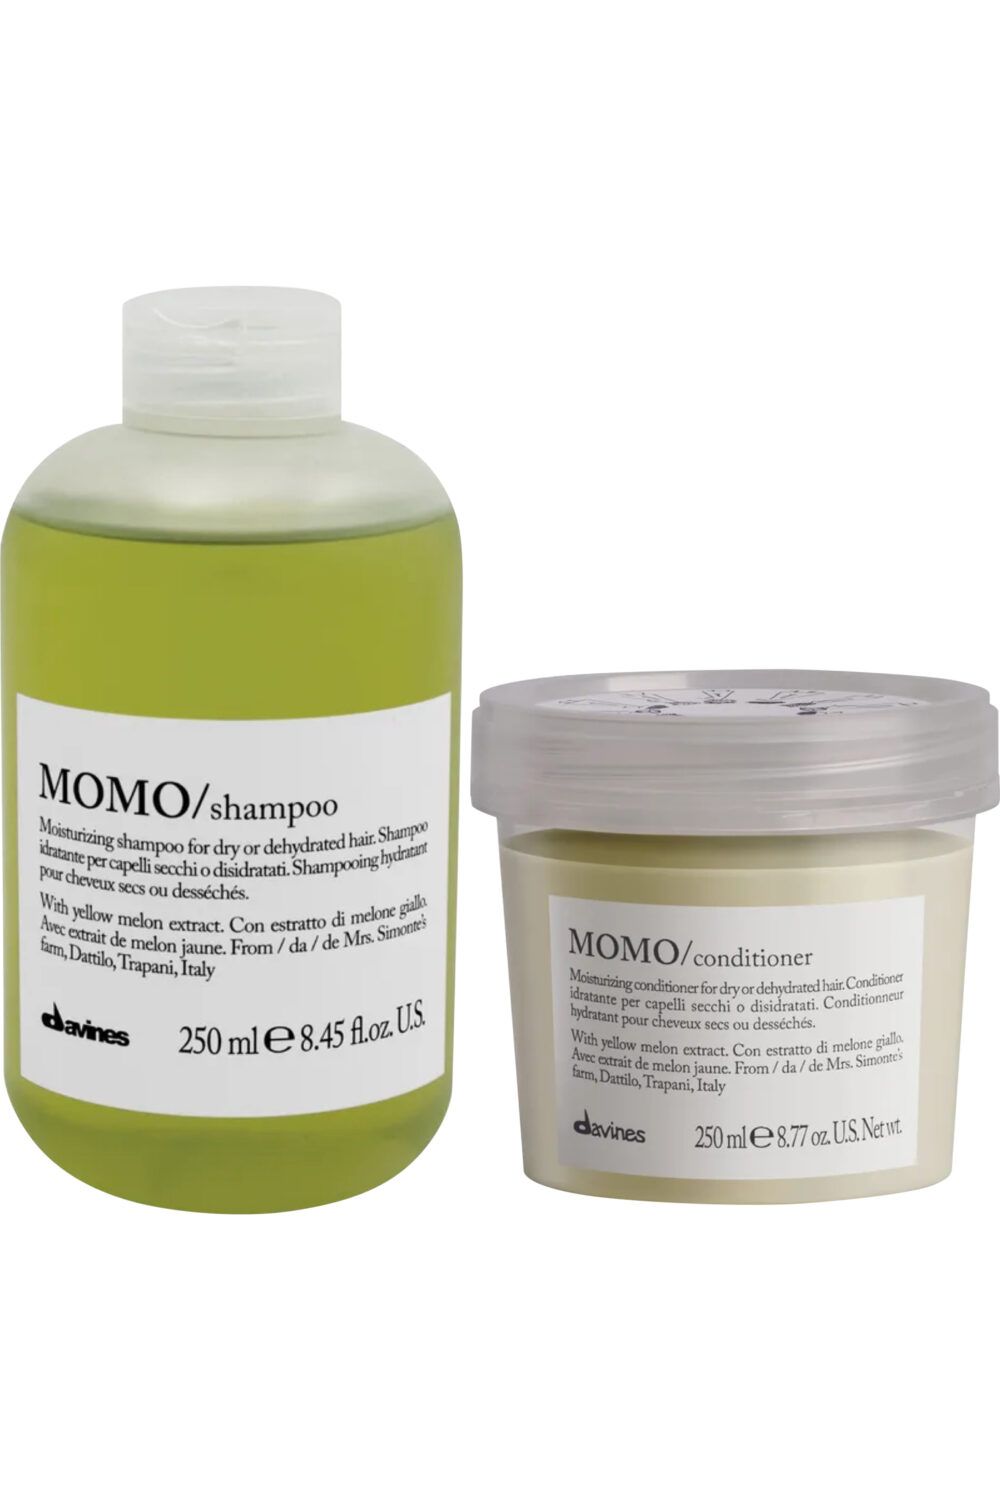 Davines - Duo pour cheveux secs shampoing et après-shampoing Momo